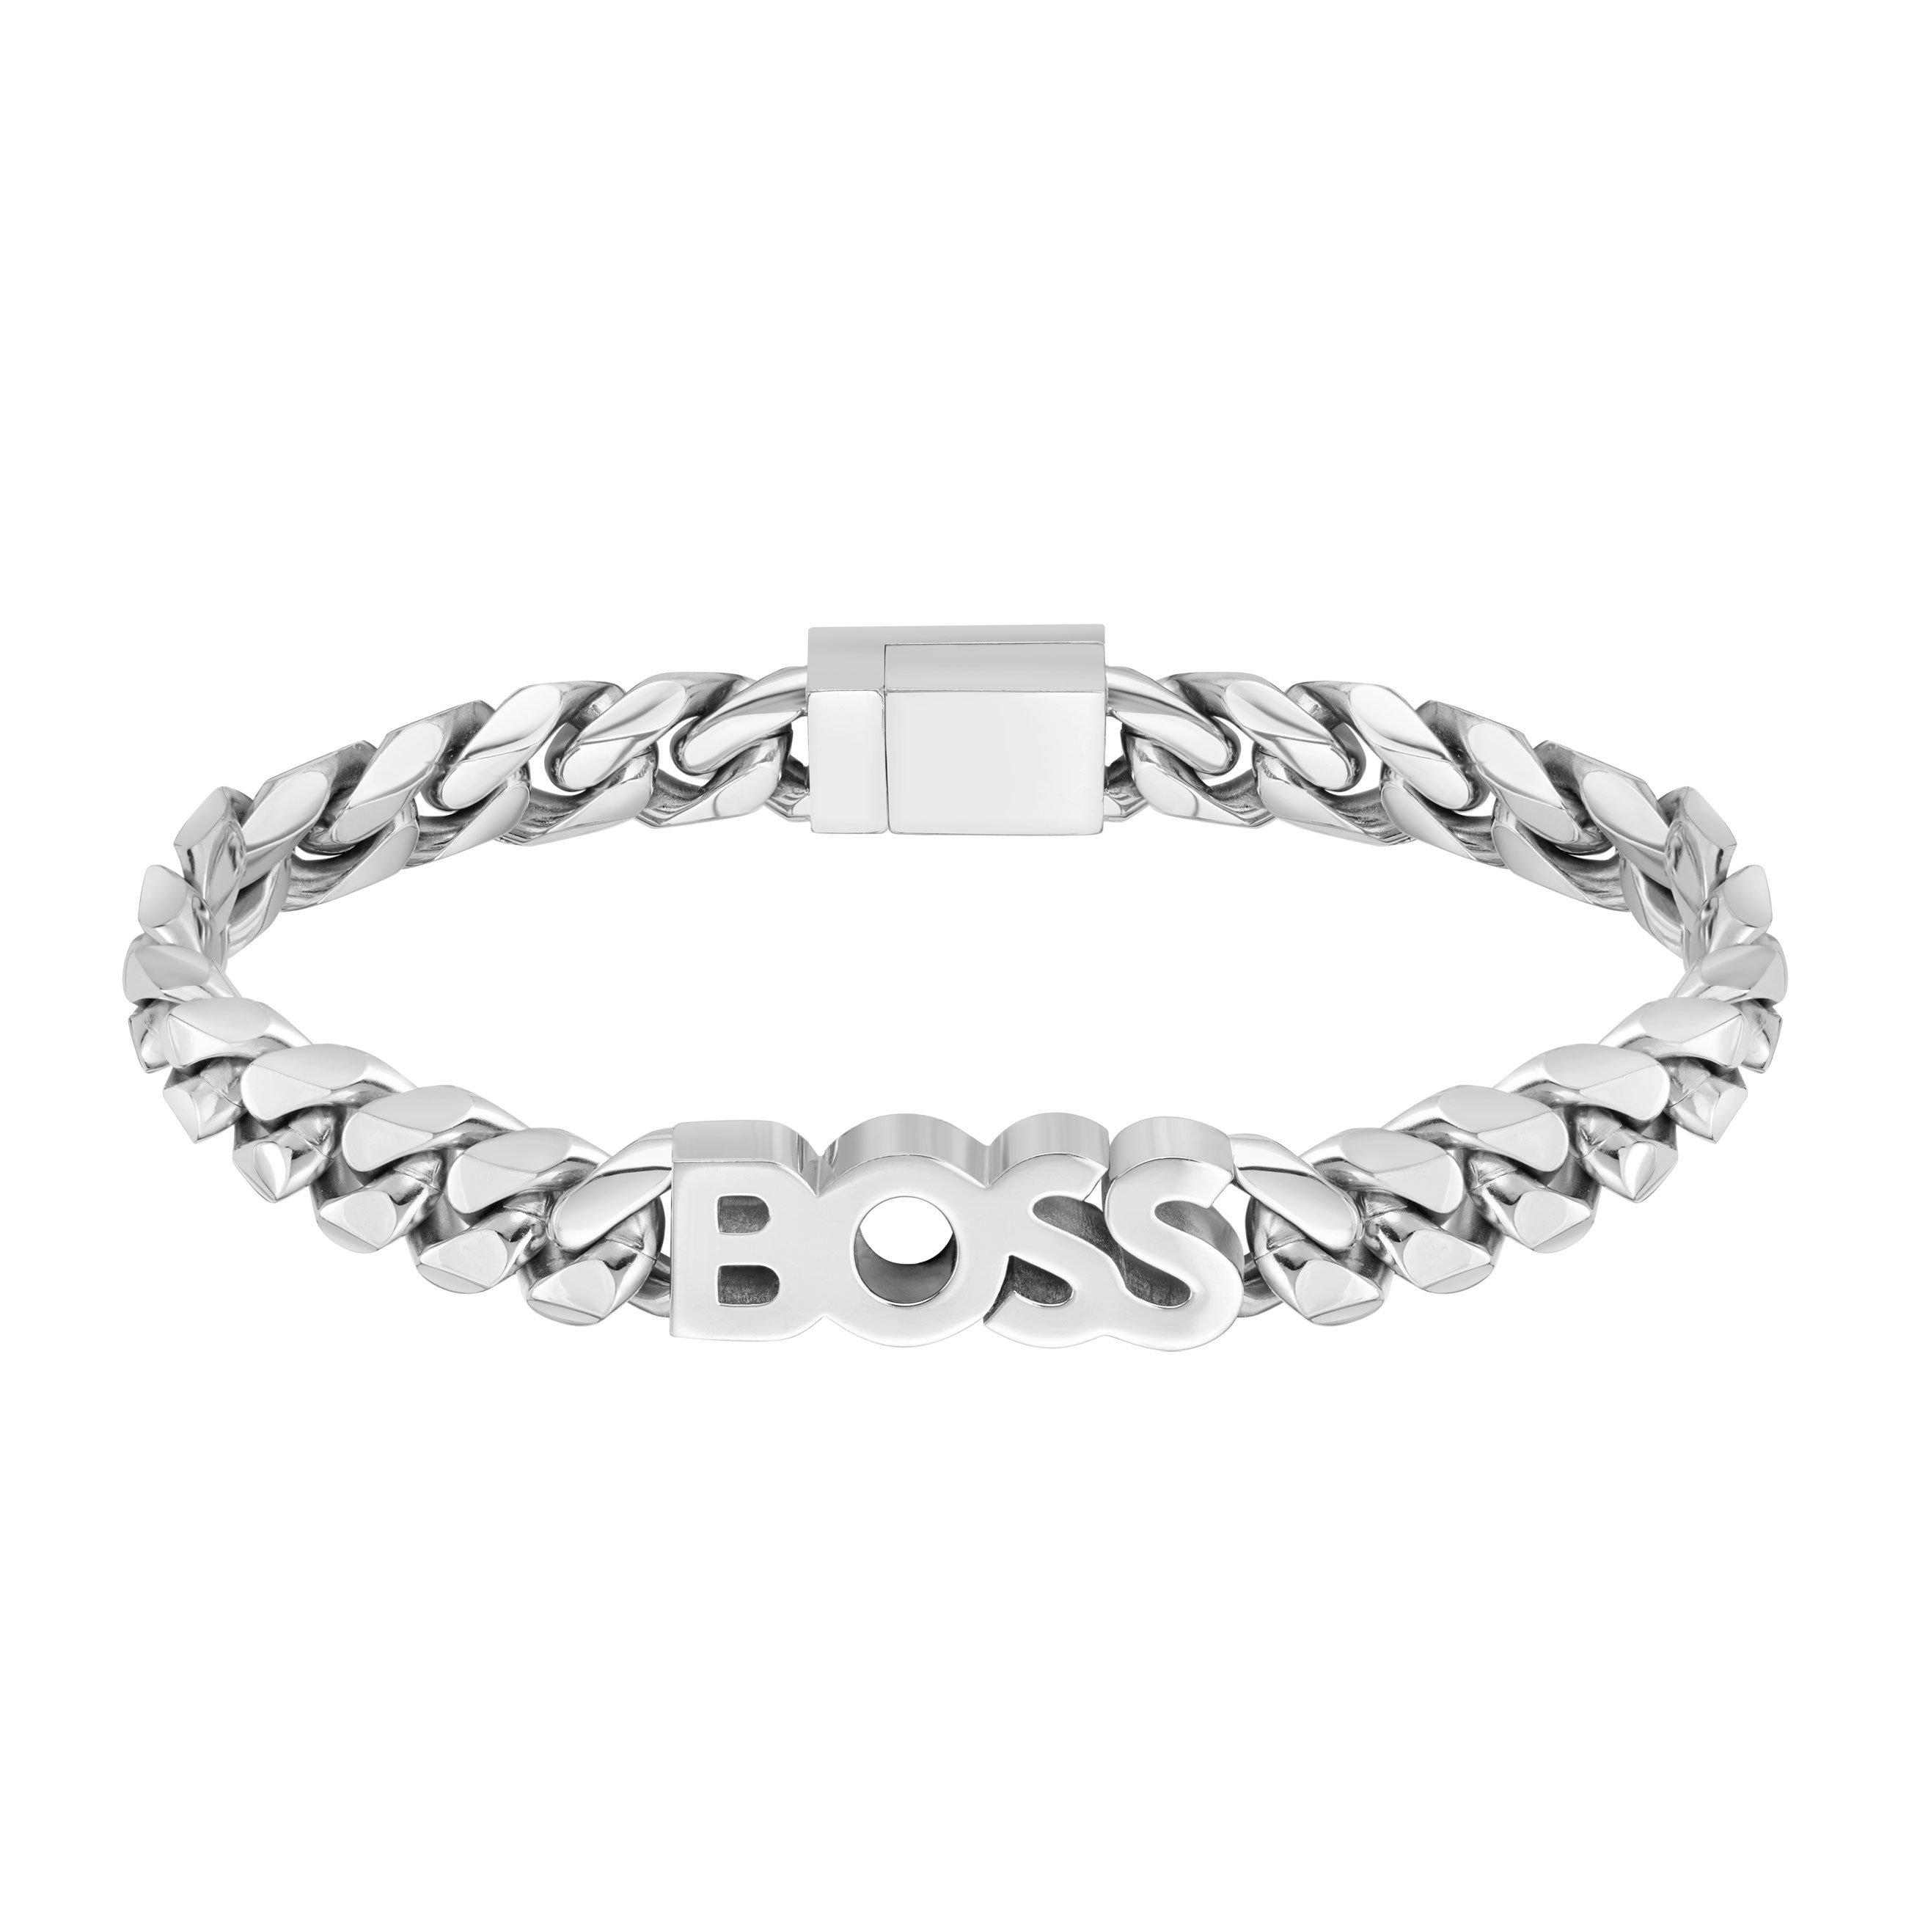 BOSS Silver Chain Men’s Bracelet | 0138558 | Beaverbrooks the Jewellers